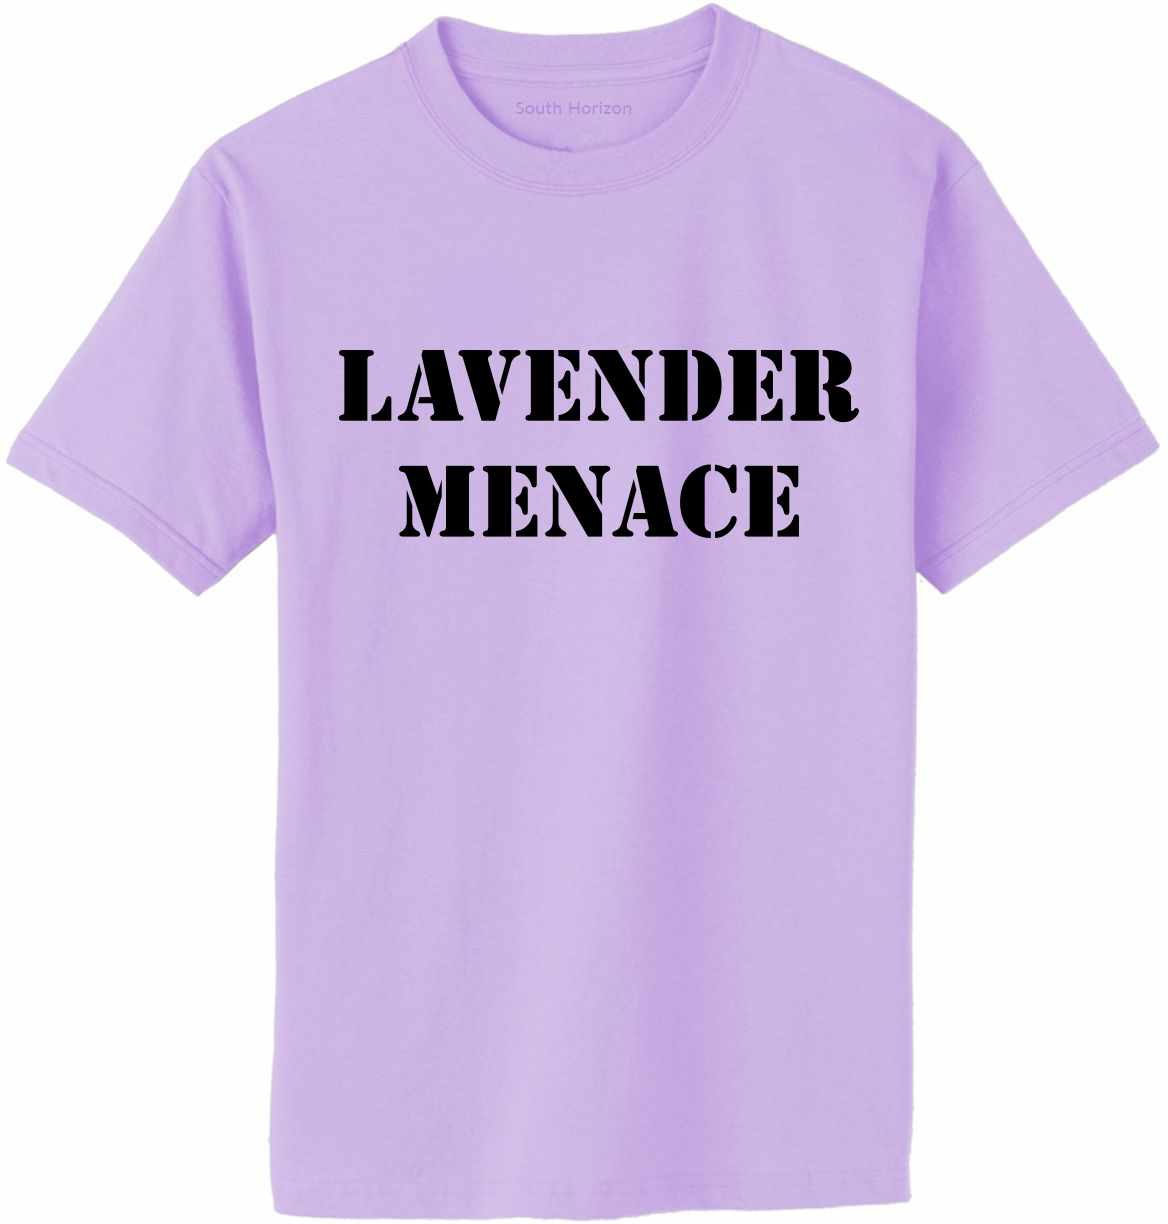 LAVENDER MENACE on Adult T-Shirt